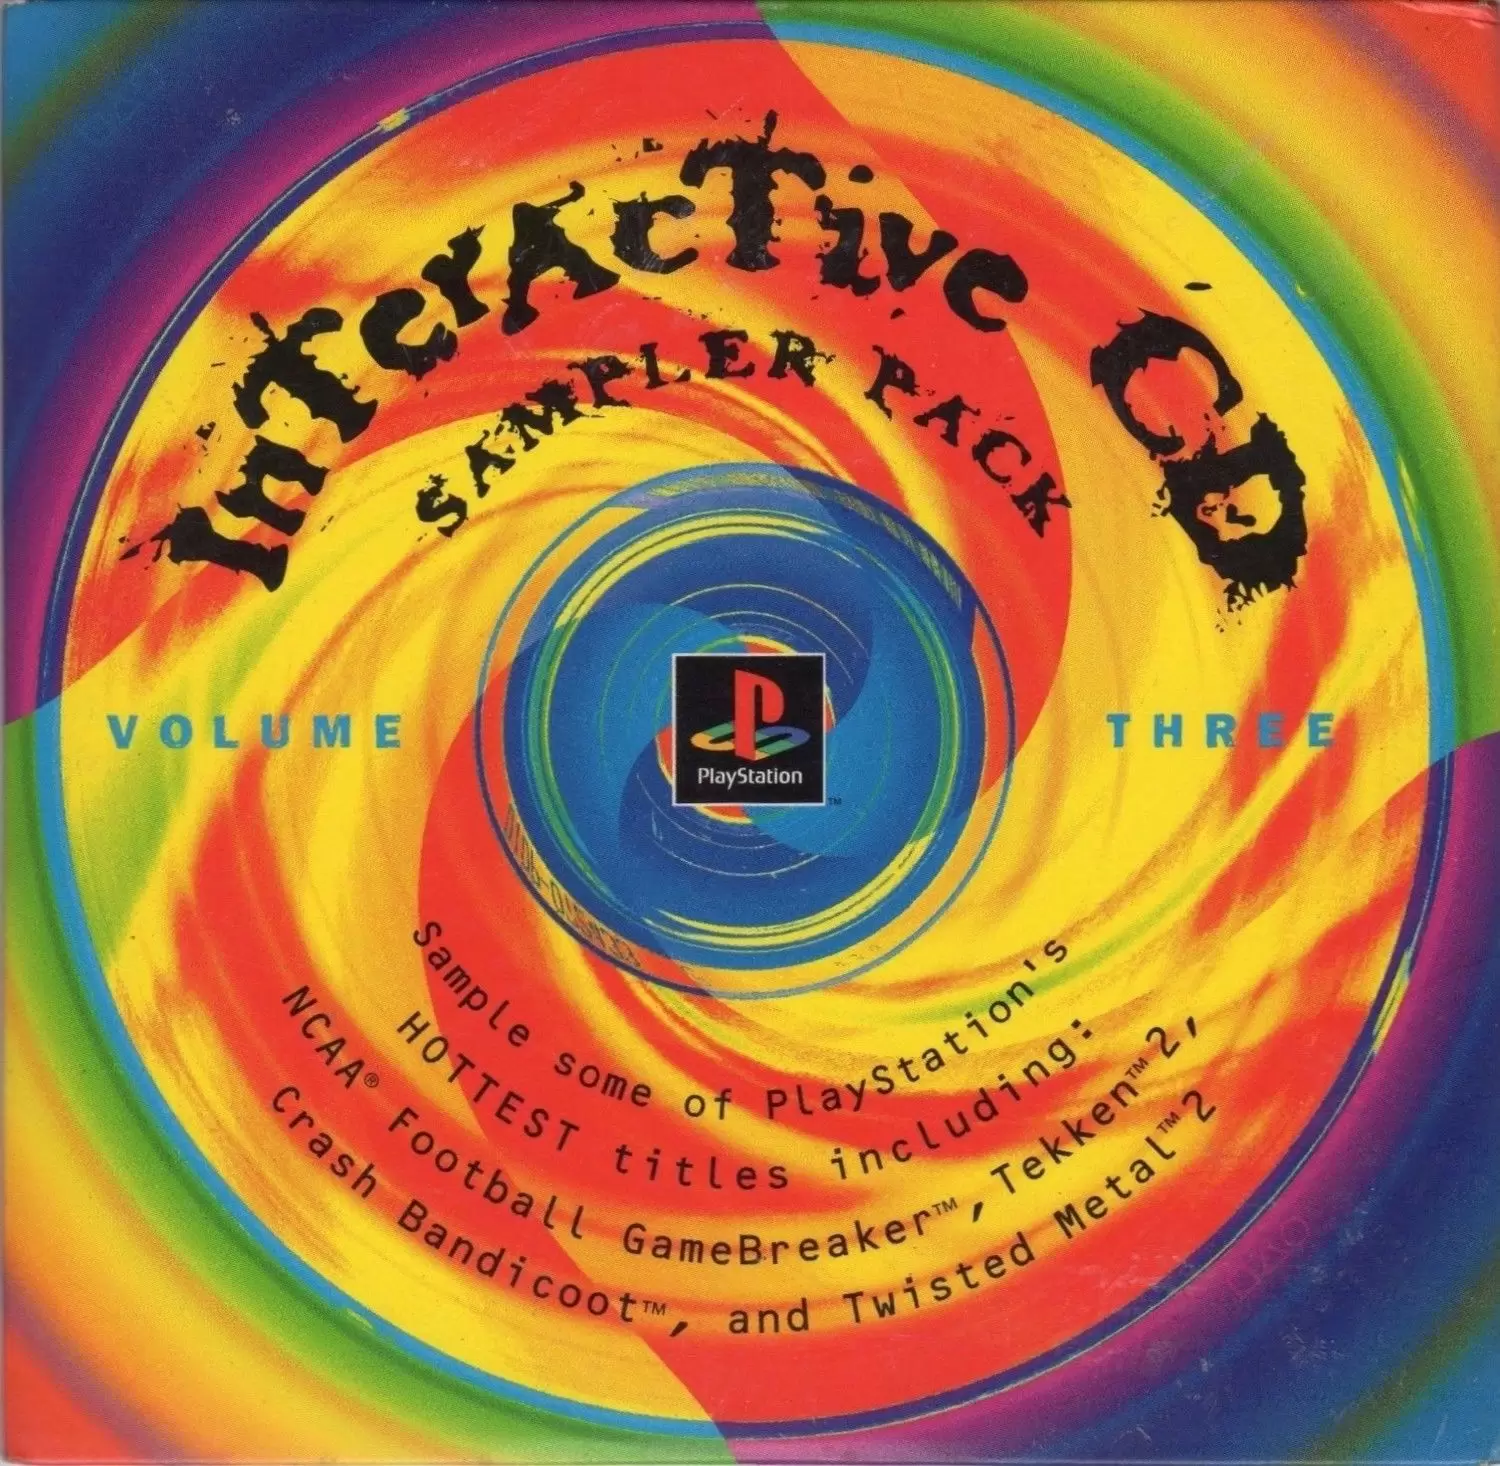 Jeux Playstation PS1 - Interactive CD Sampler Pack Volume 3